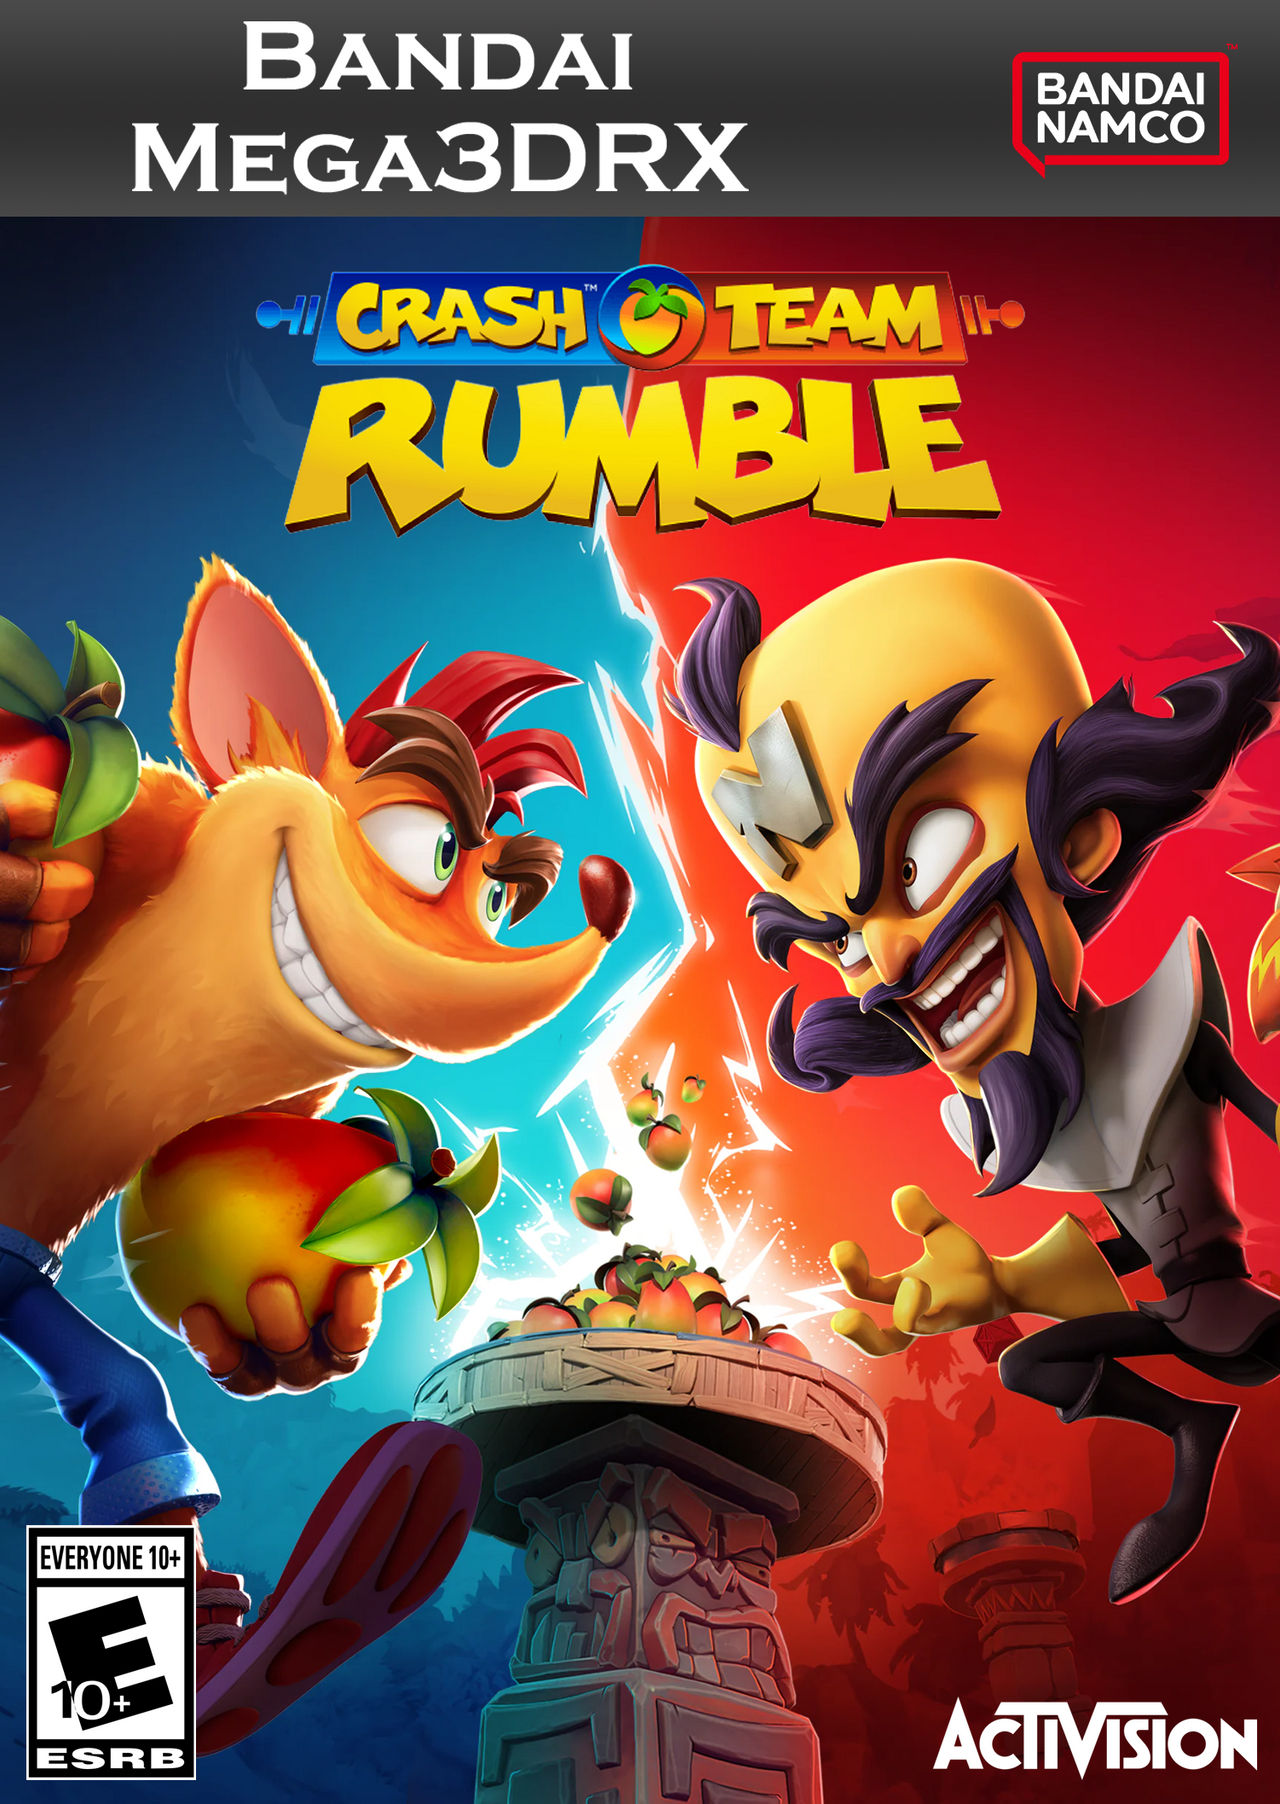 GladLad™ on X: Running rumble - Rush, Ambush, seek. A funny